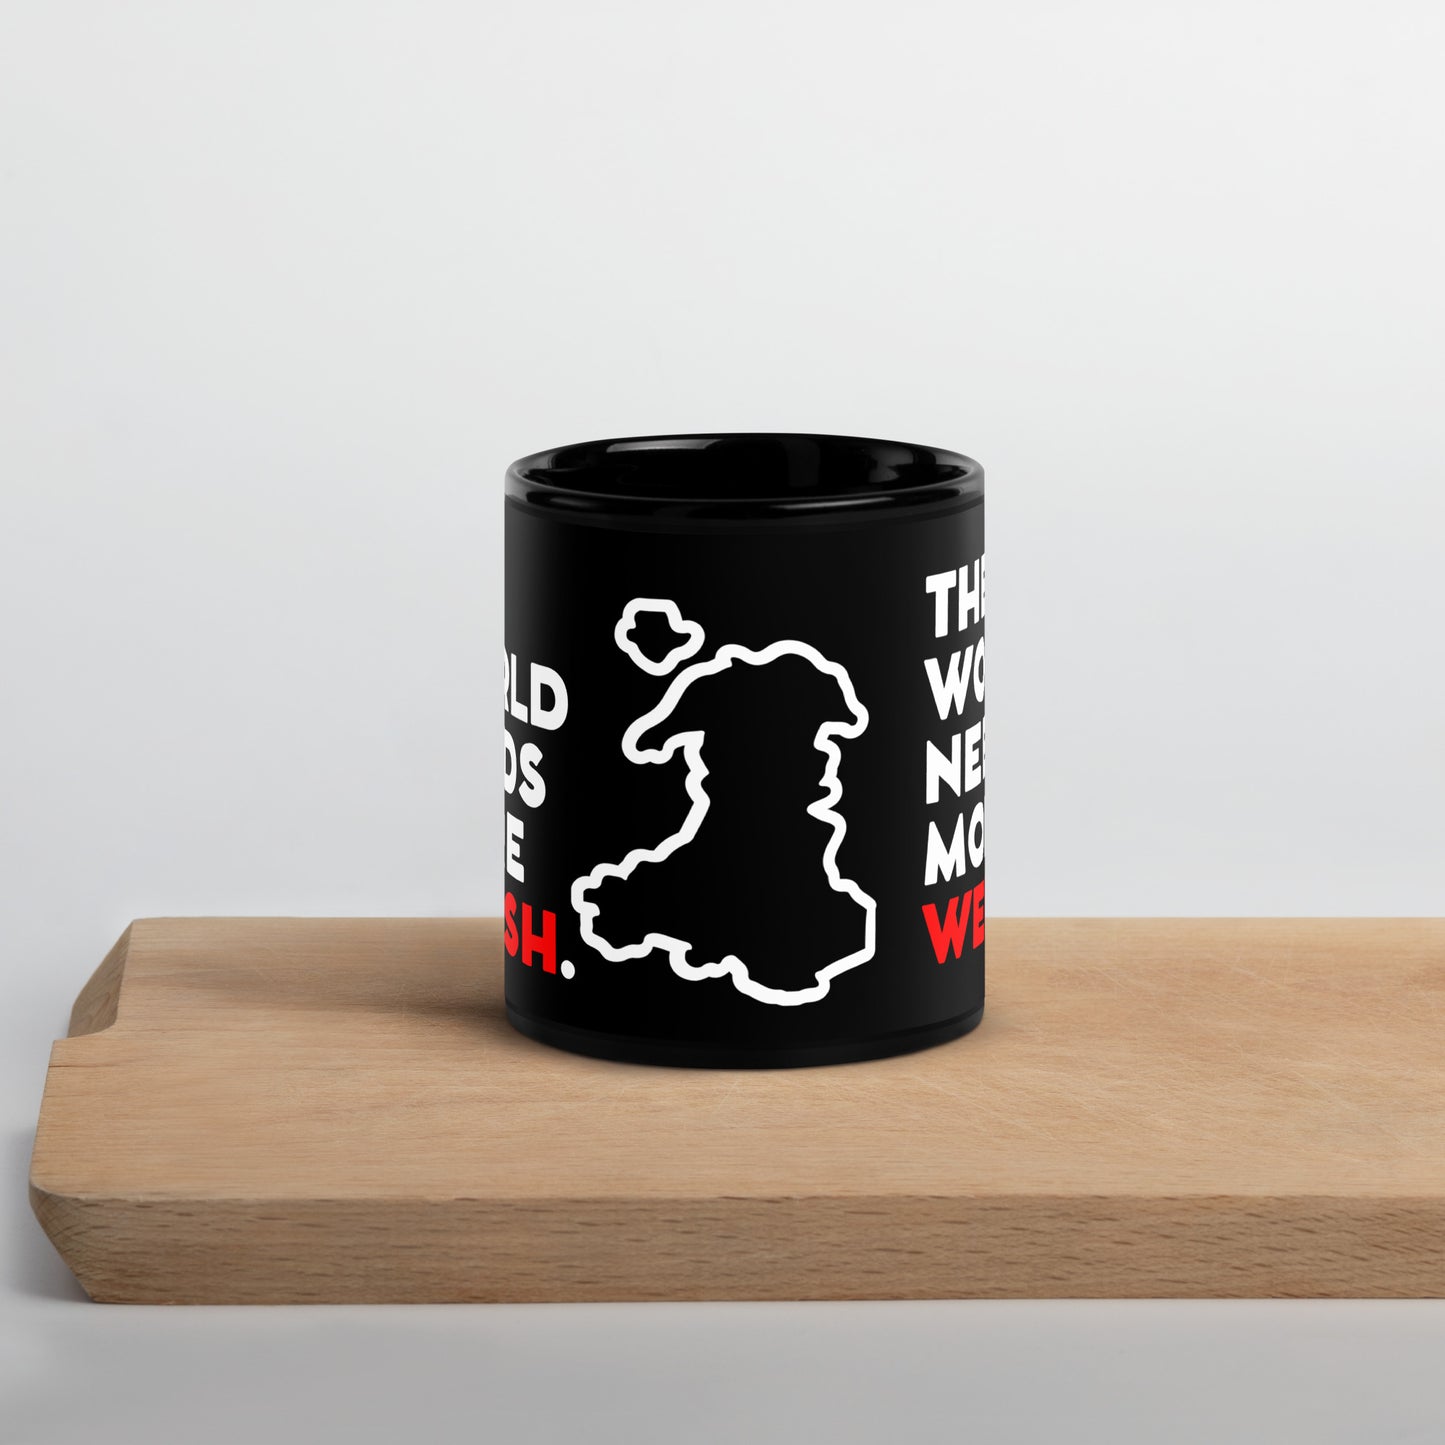 More Welsh - Black Glossy Mug